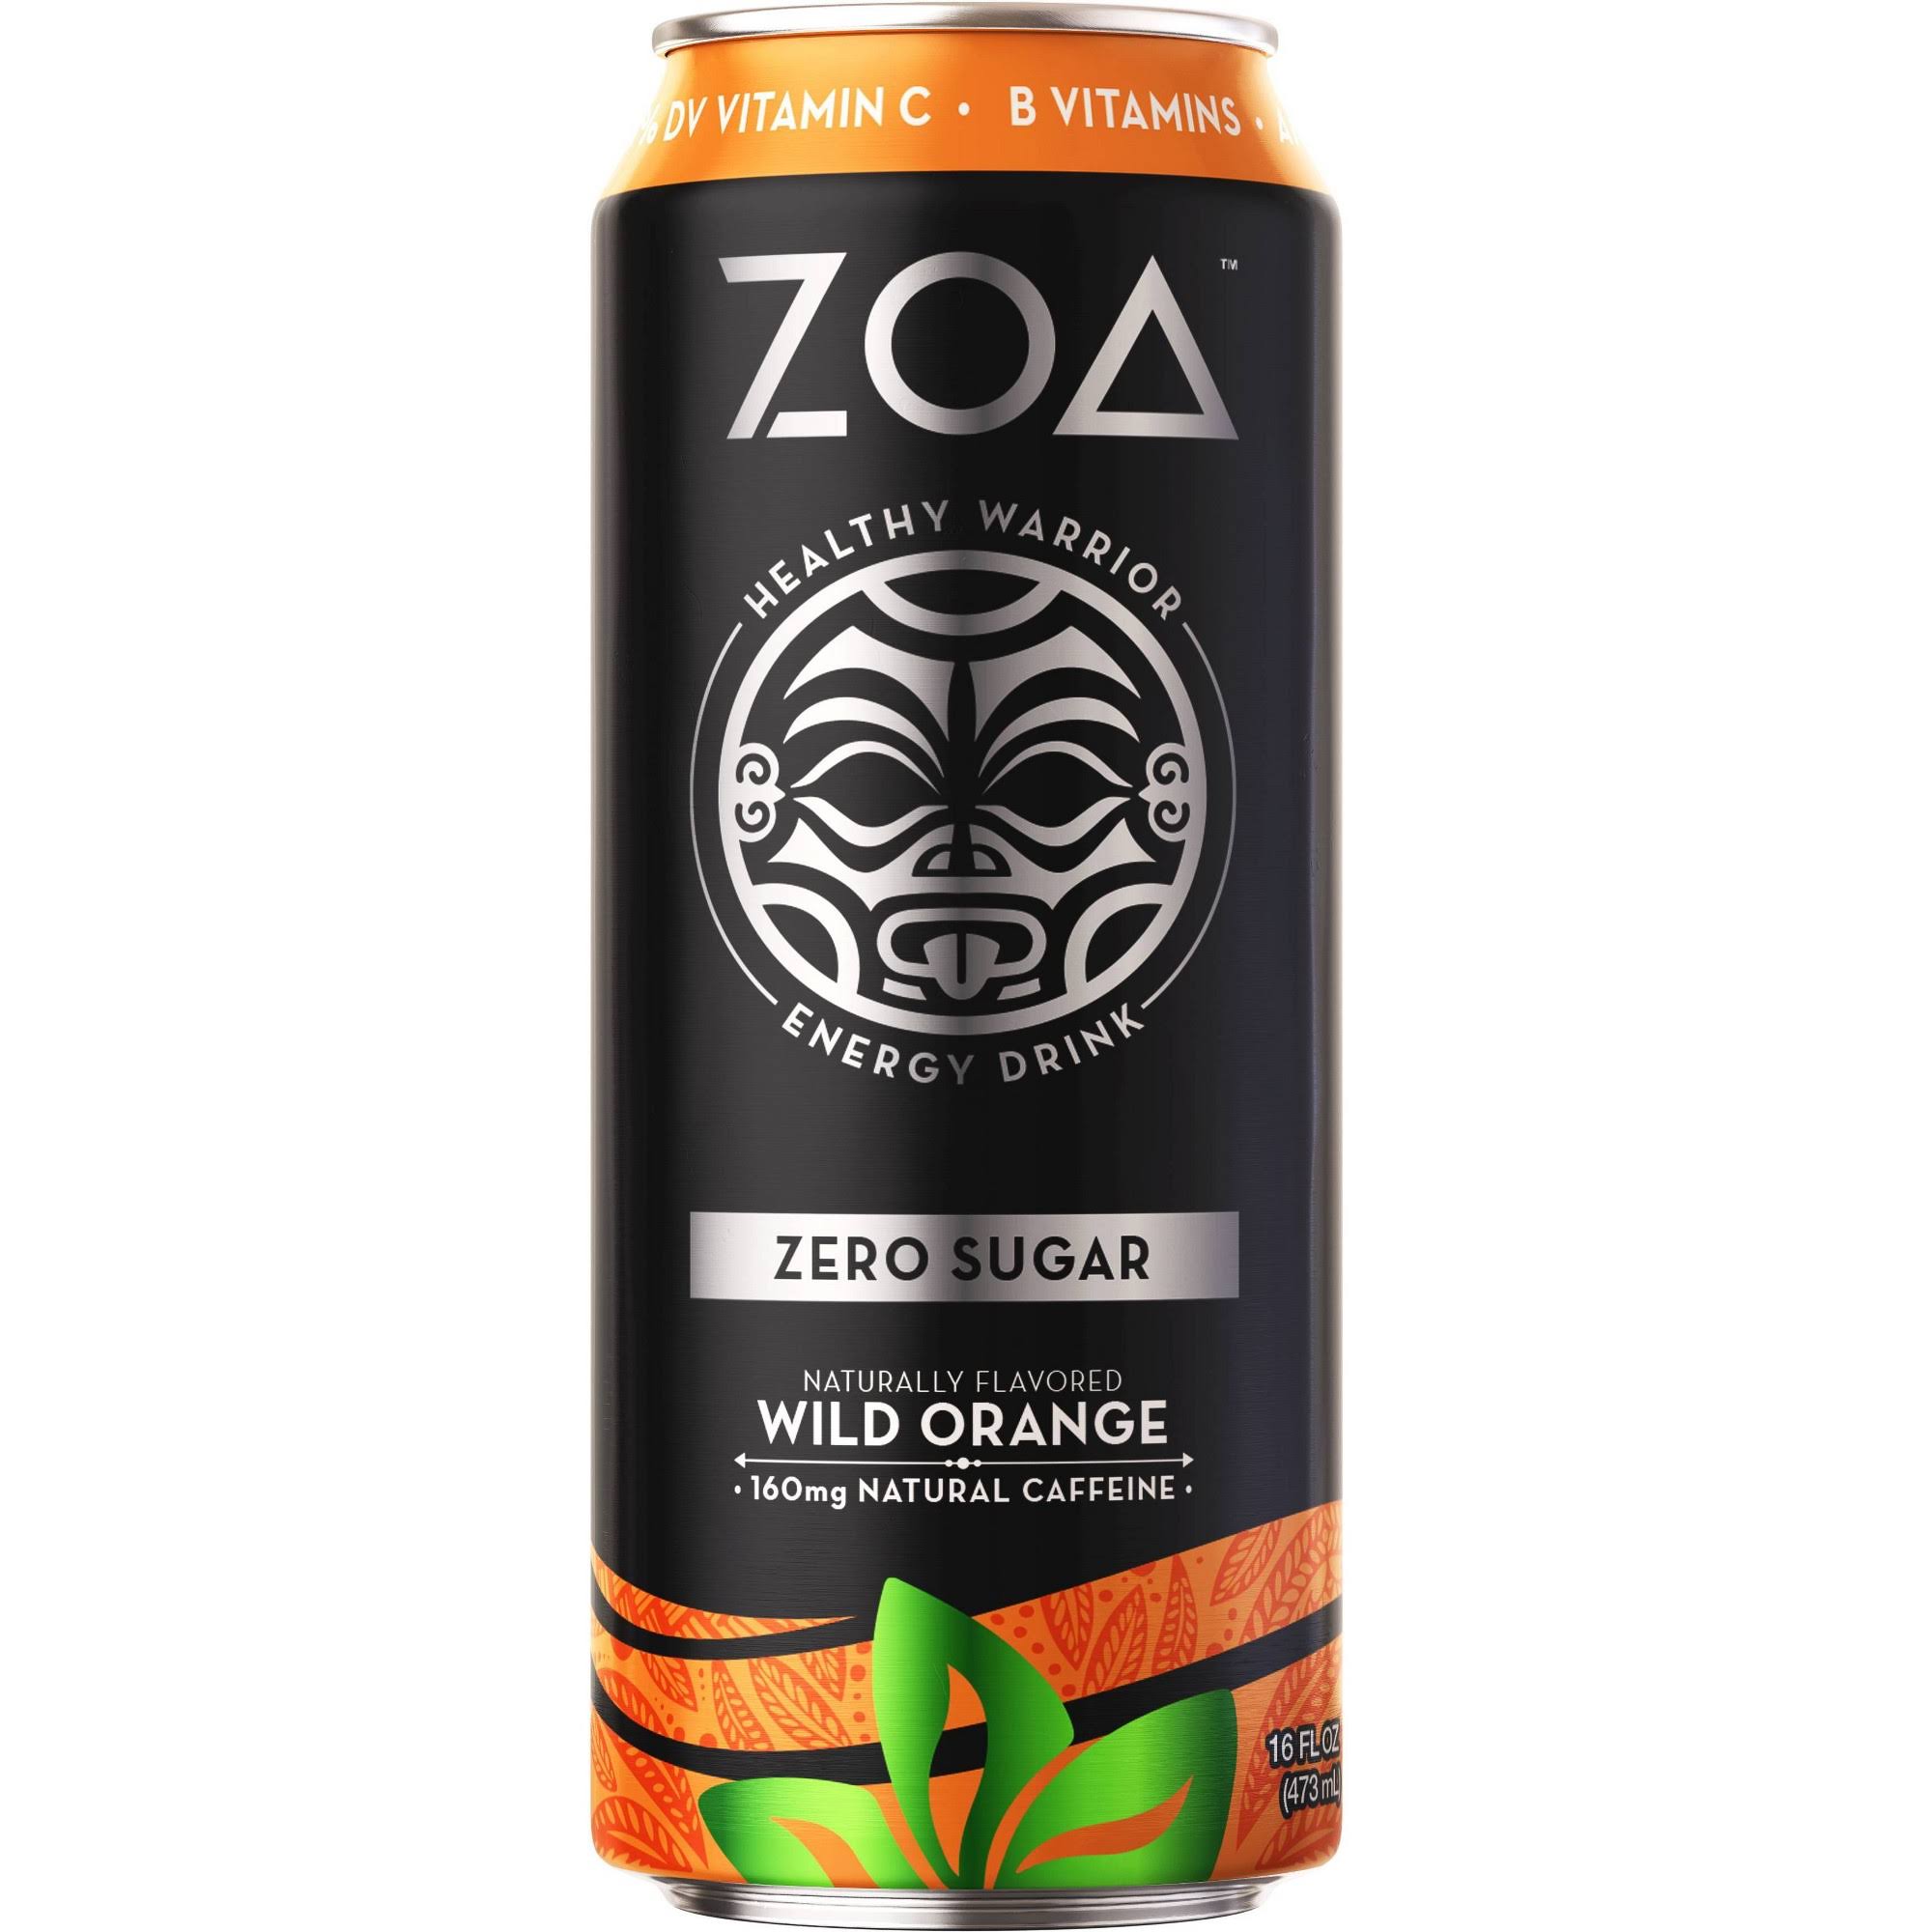 Zoa Energy Drink, Zero Sugar, Wild Orange - 16 fl oz